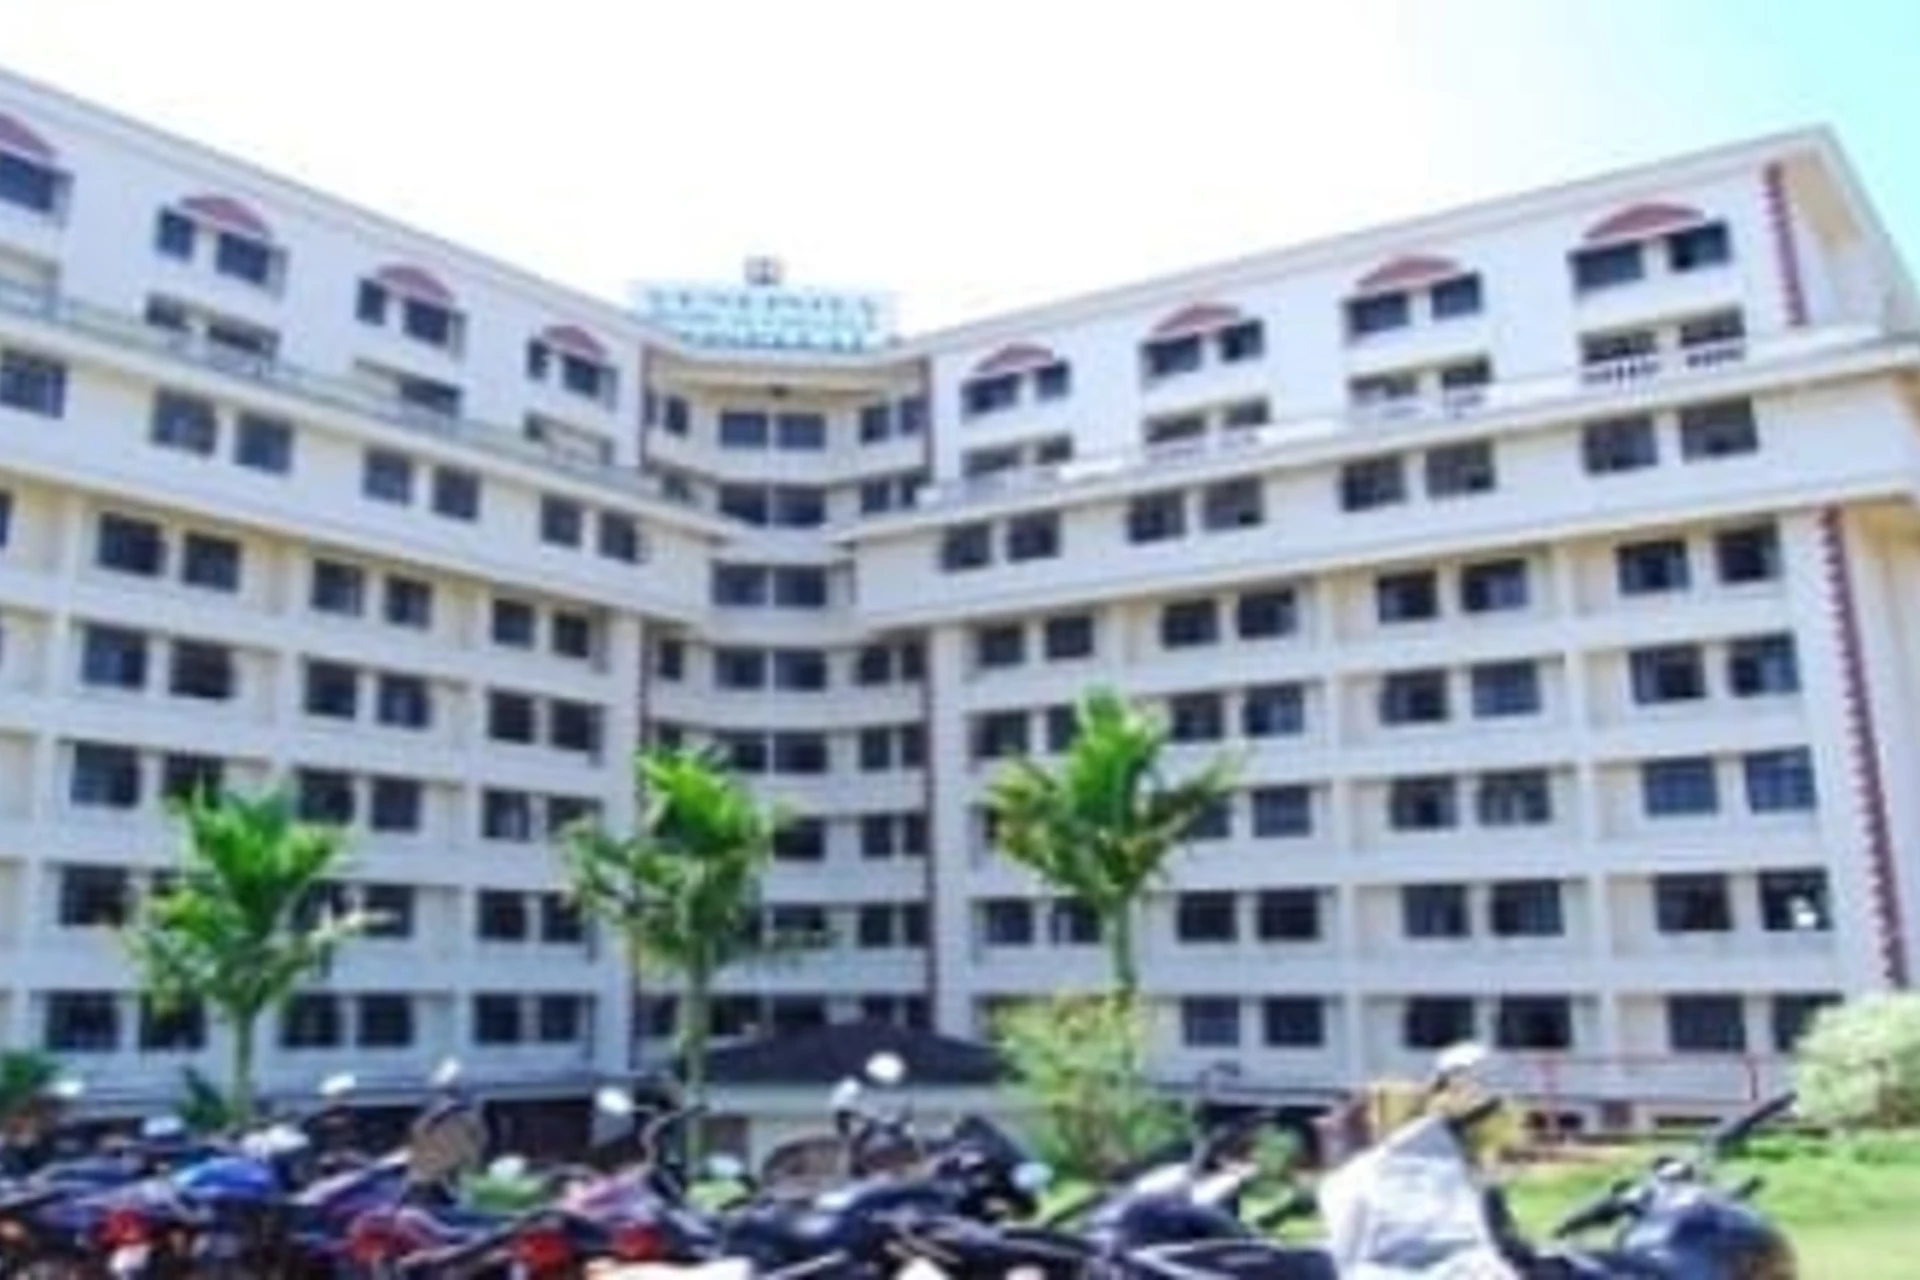 Yenepoya Physiotherapy College